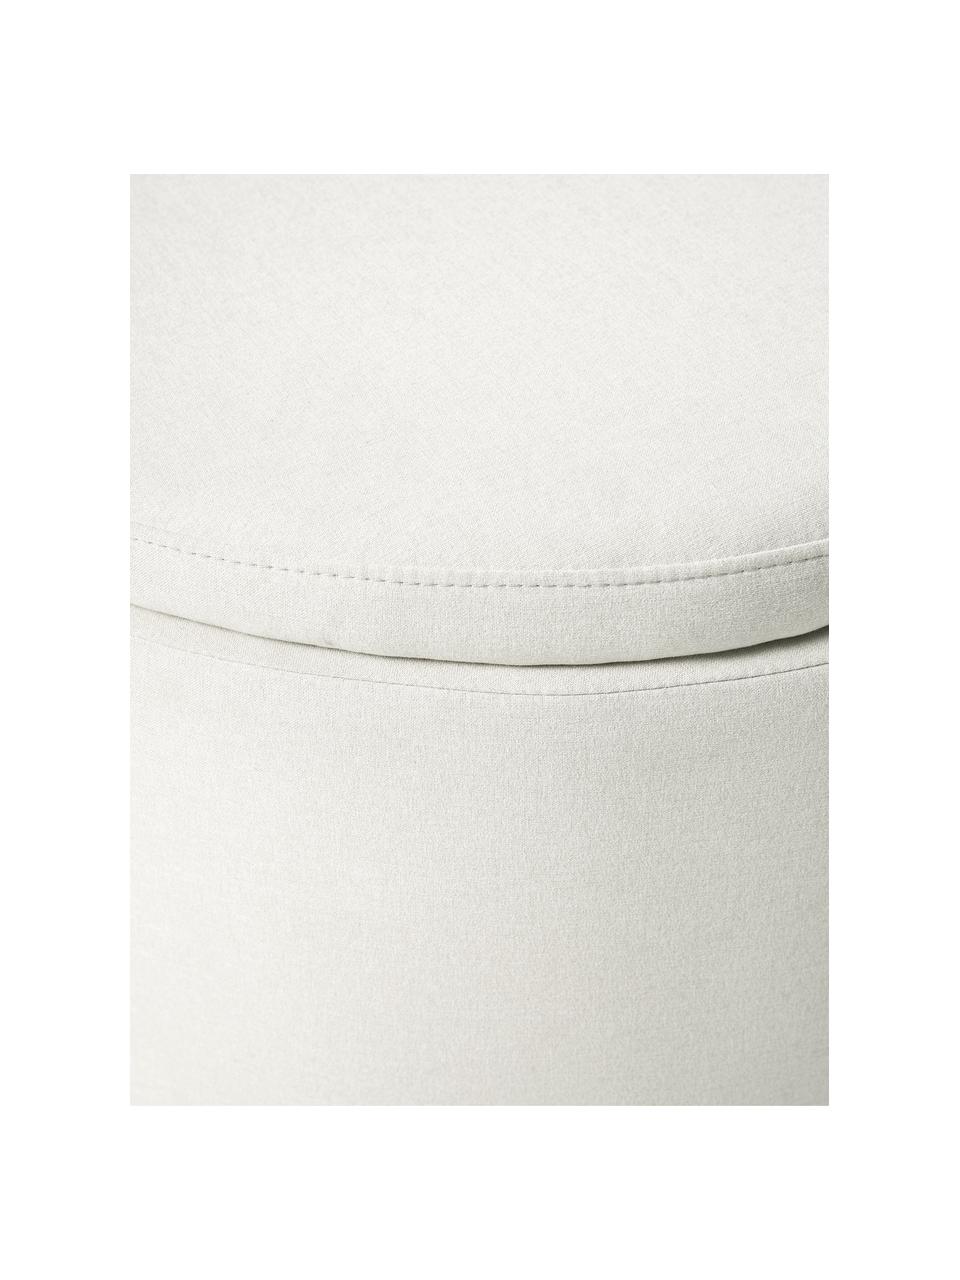 Grand pouf avec rangement Alida, Tissu blanc cassé, Ø 69 x haut. 42 cm